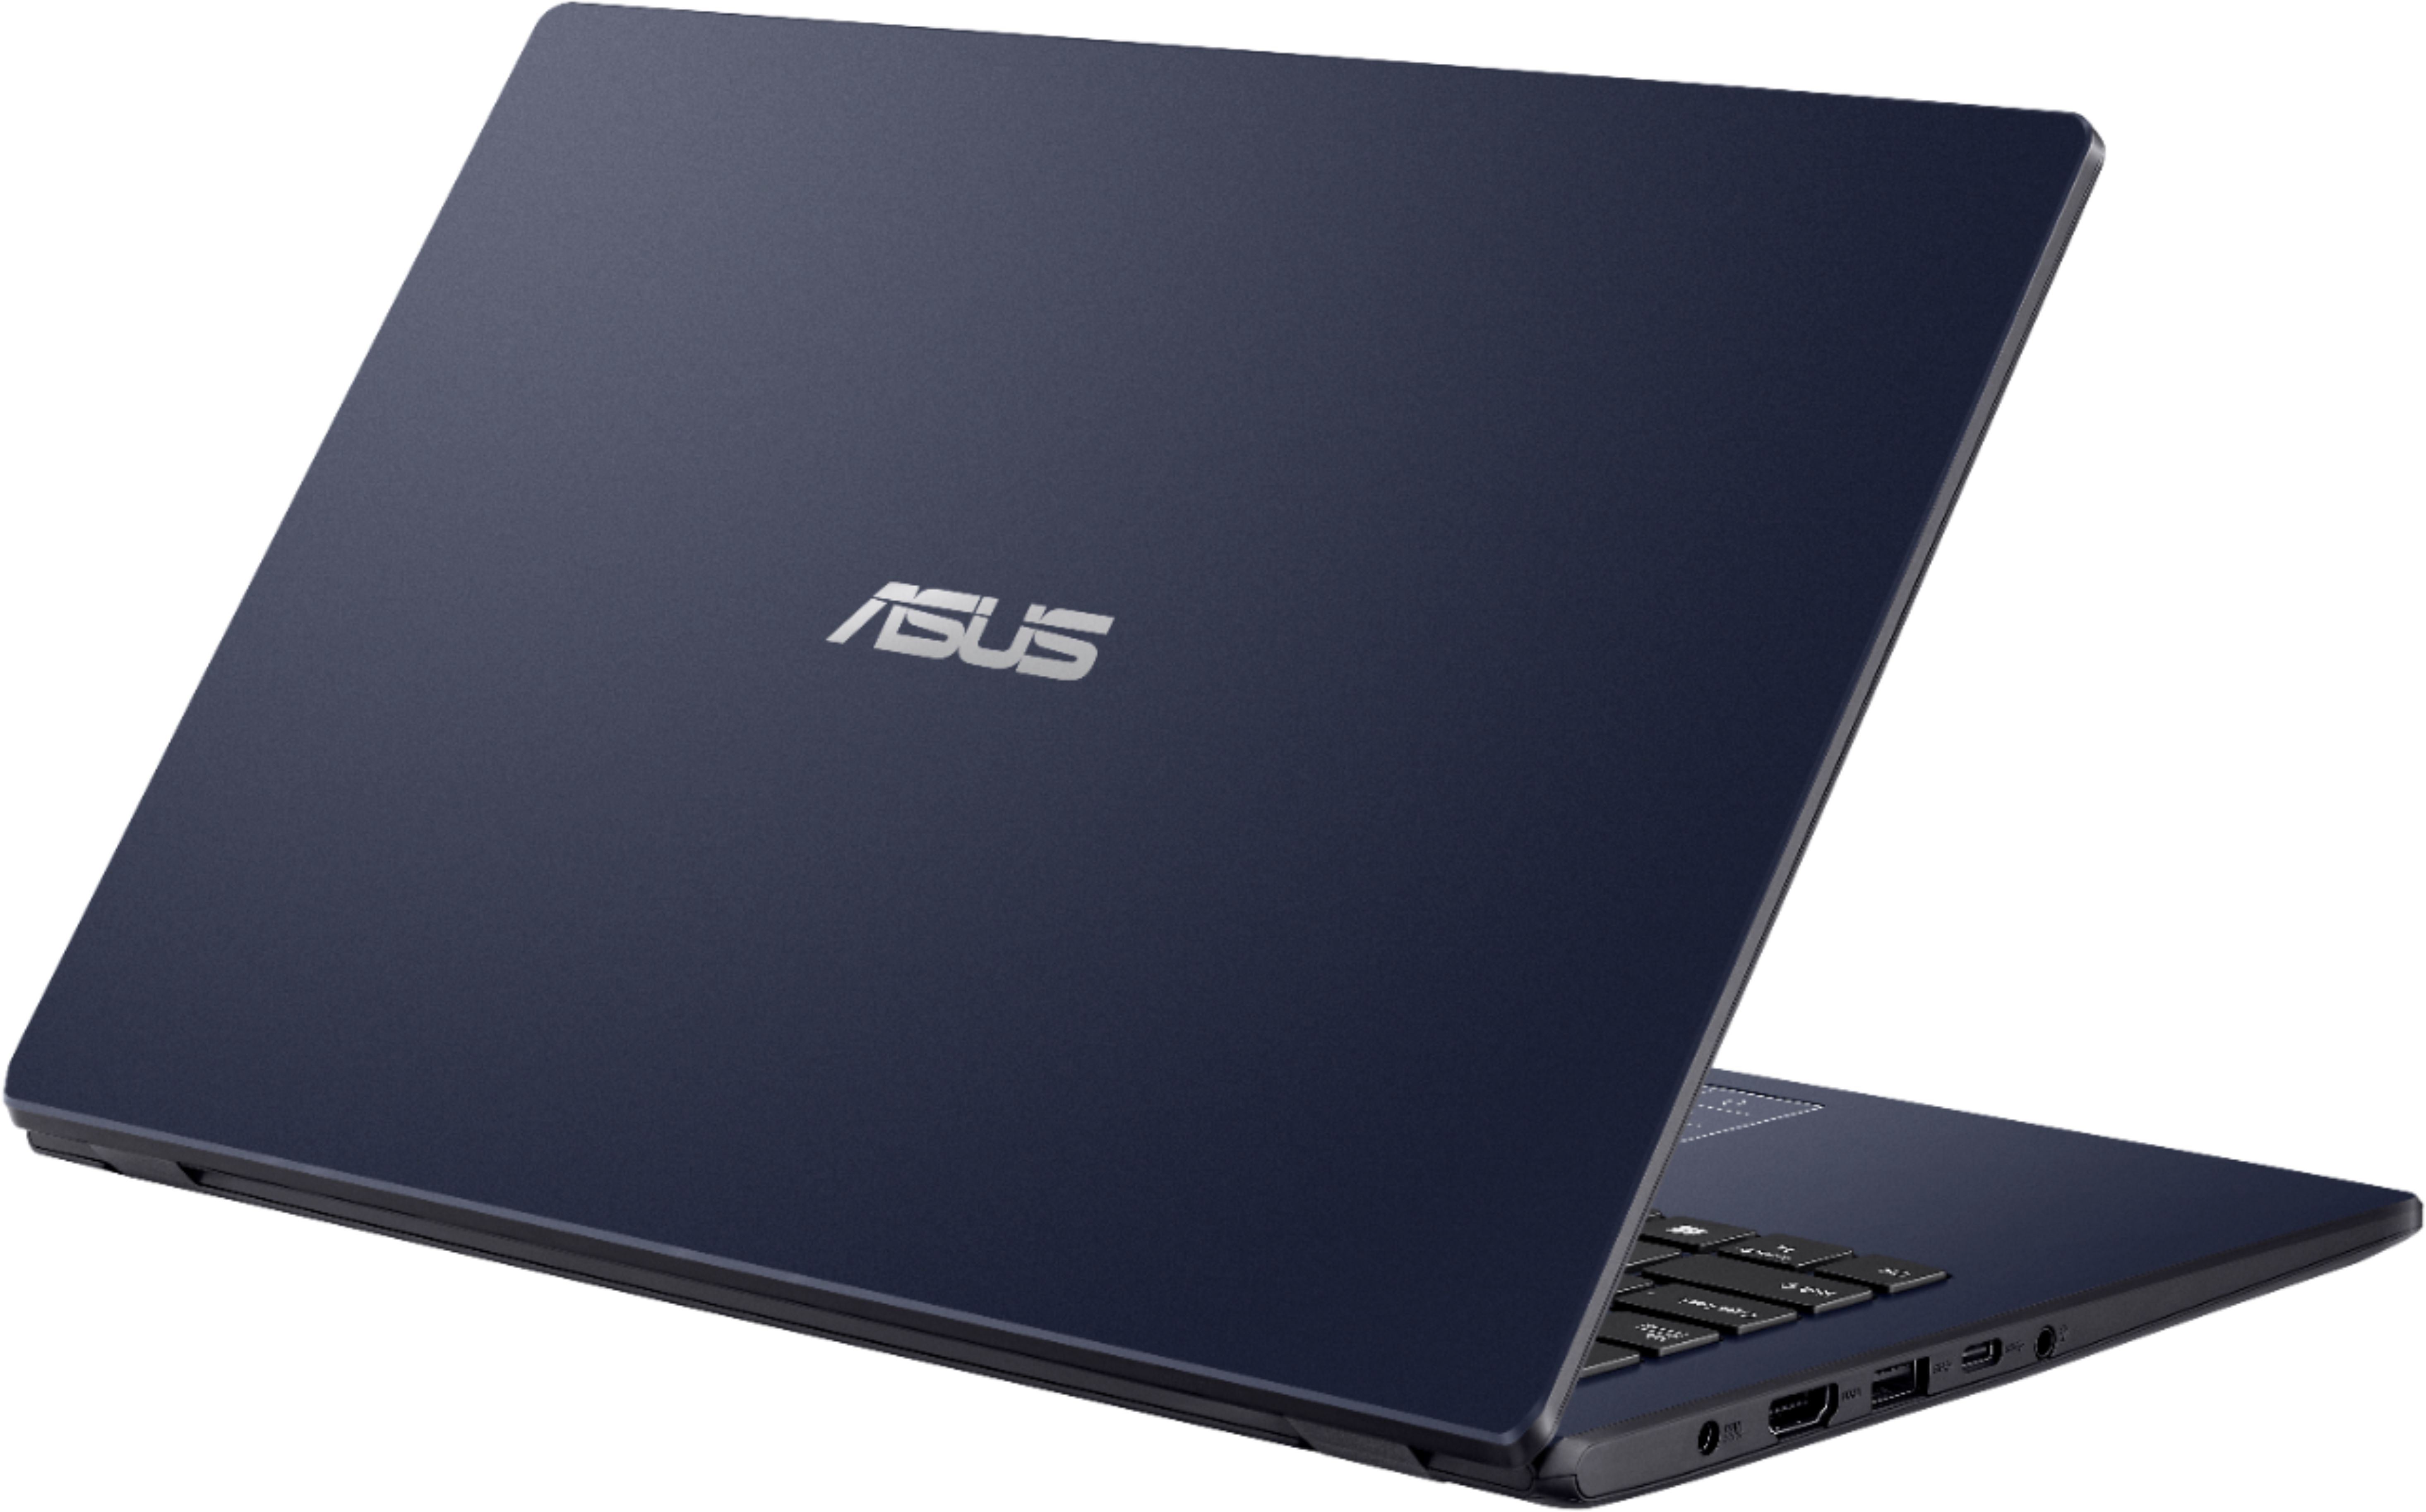 ASUS - 14.0" Laptop - Intel Celeron N4020 - 4GB Memory - 64GB eMMC - Star Black - image 2 of 4